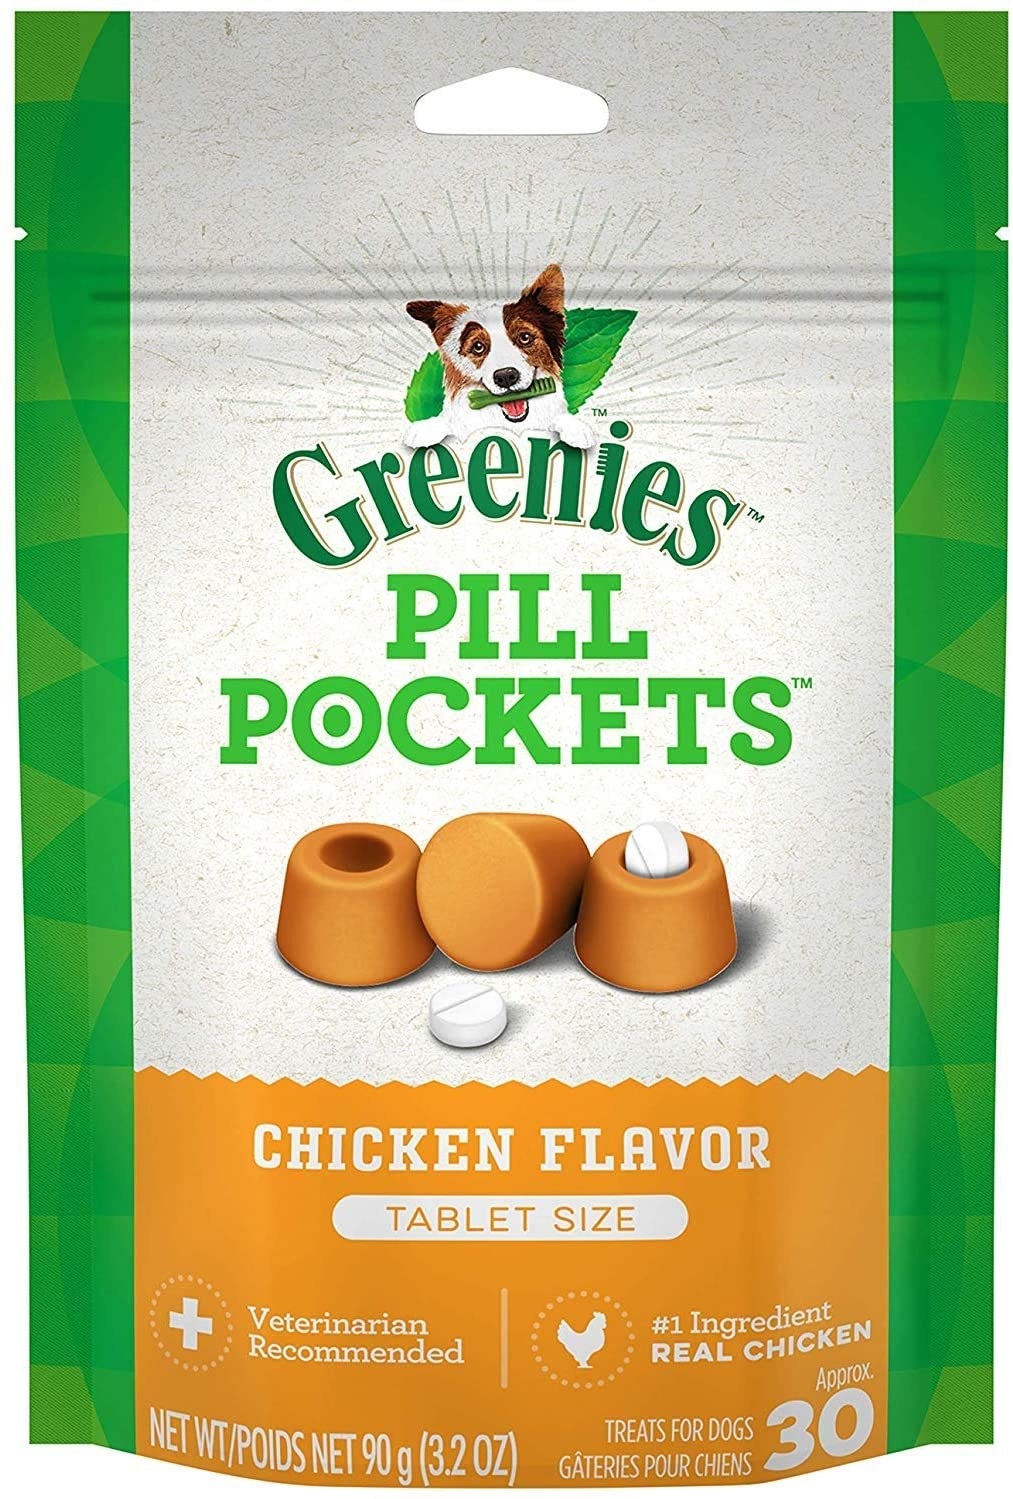 The pill pockets